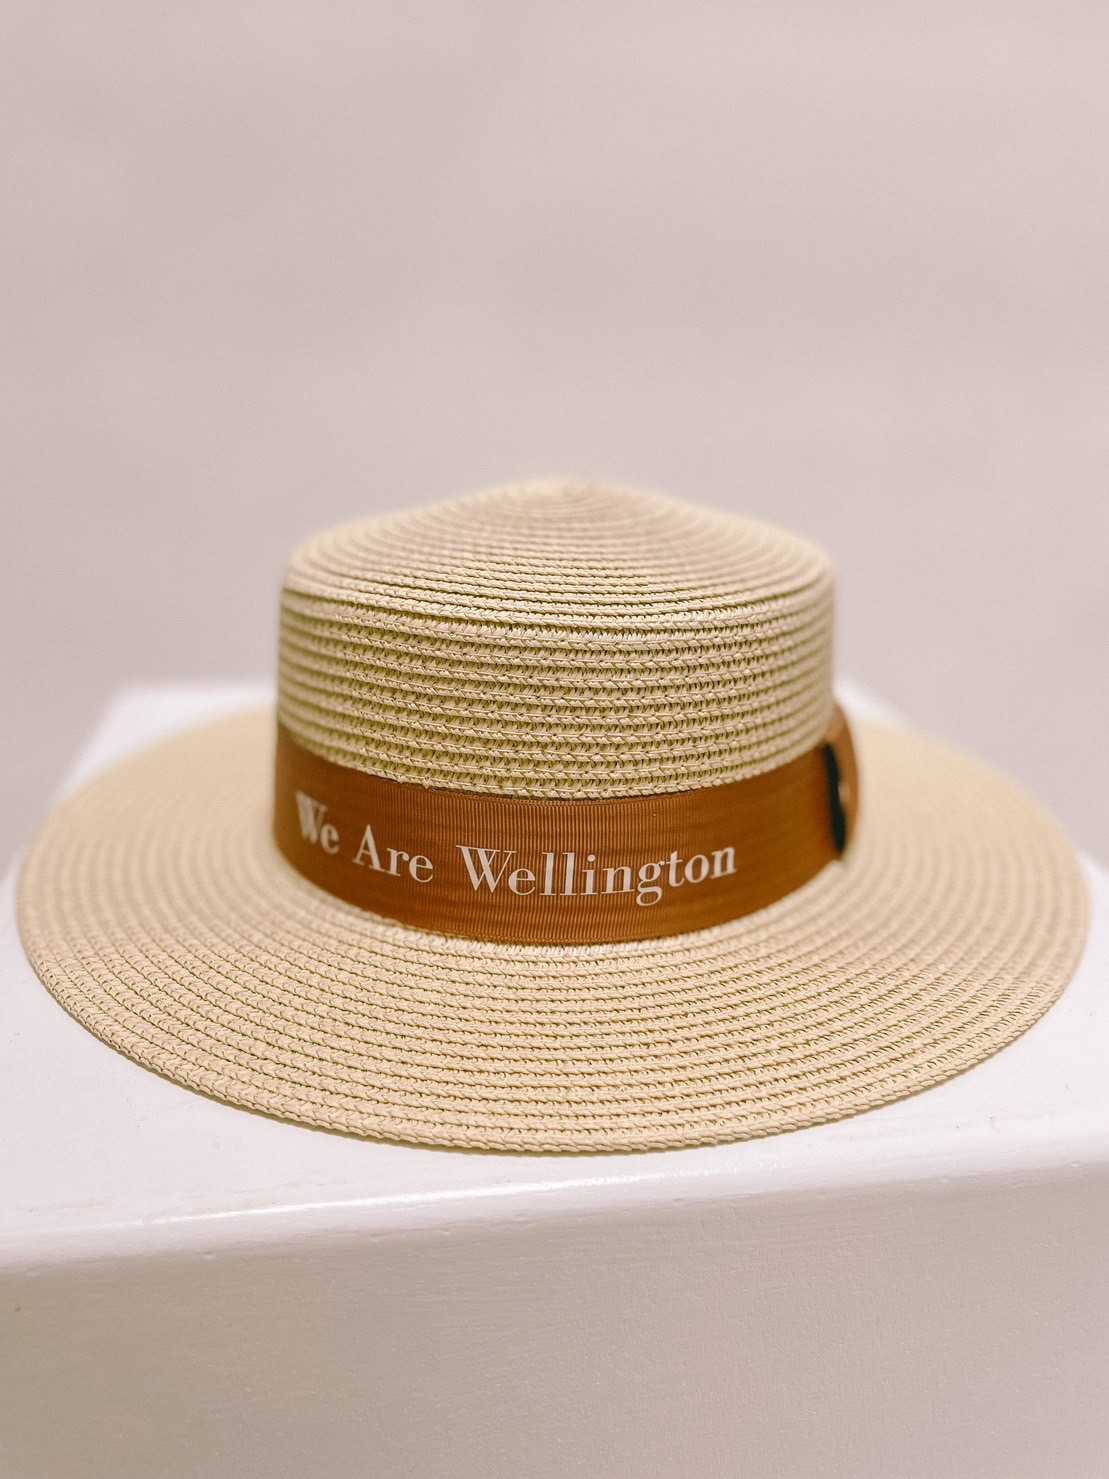 Wellington Boater Hat